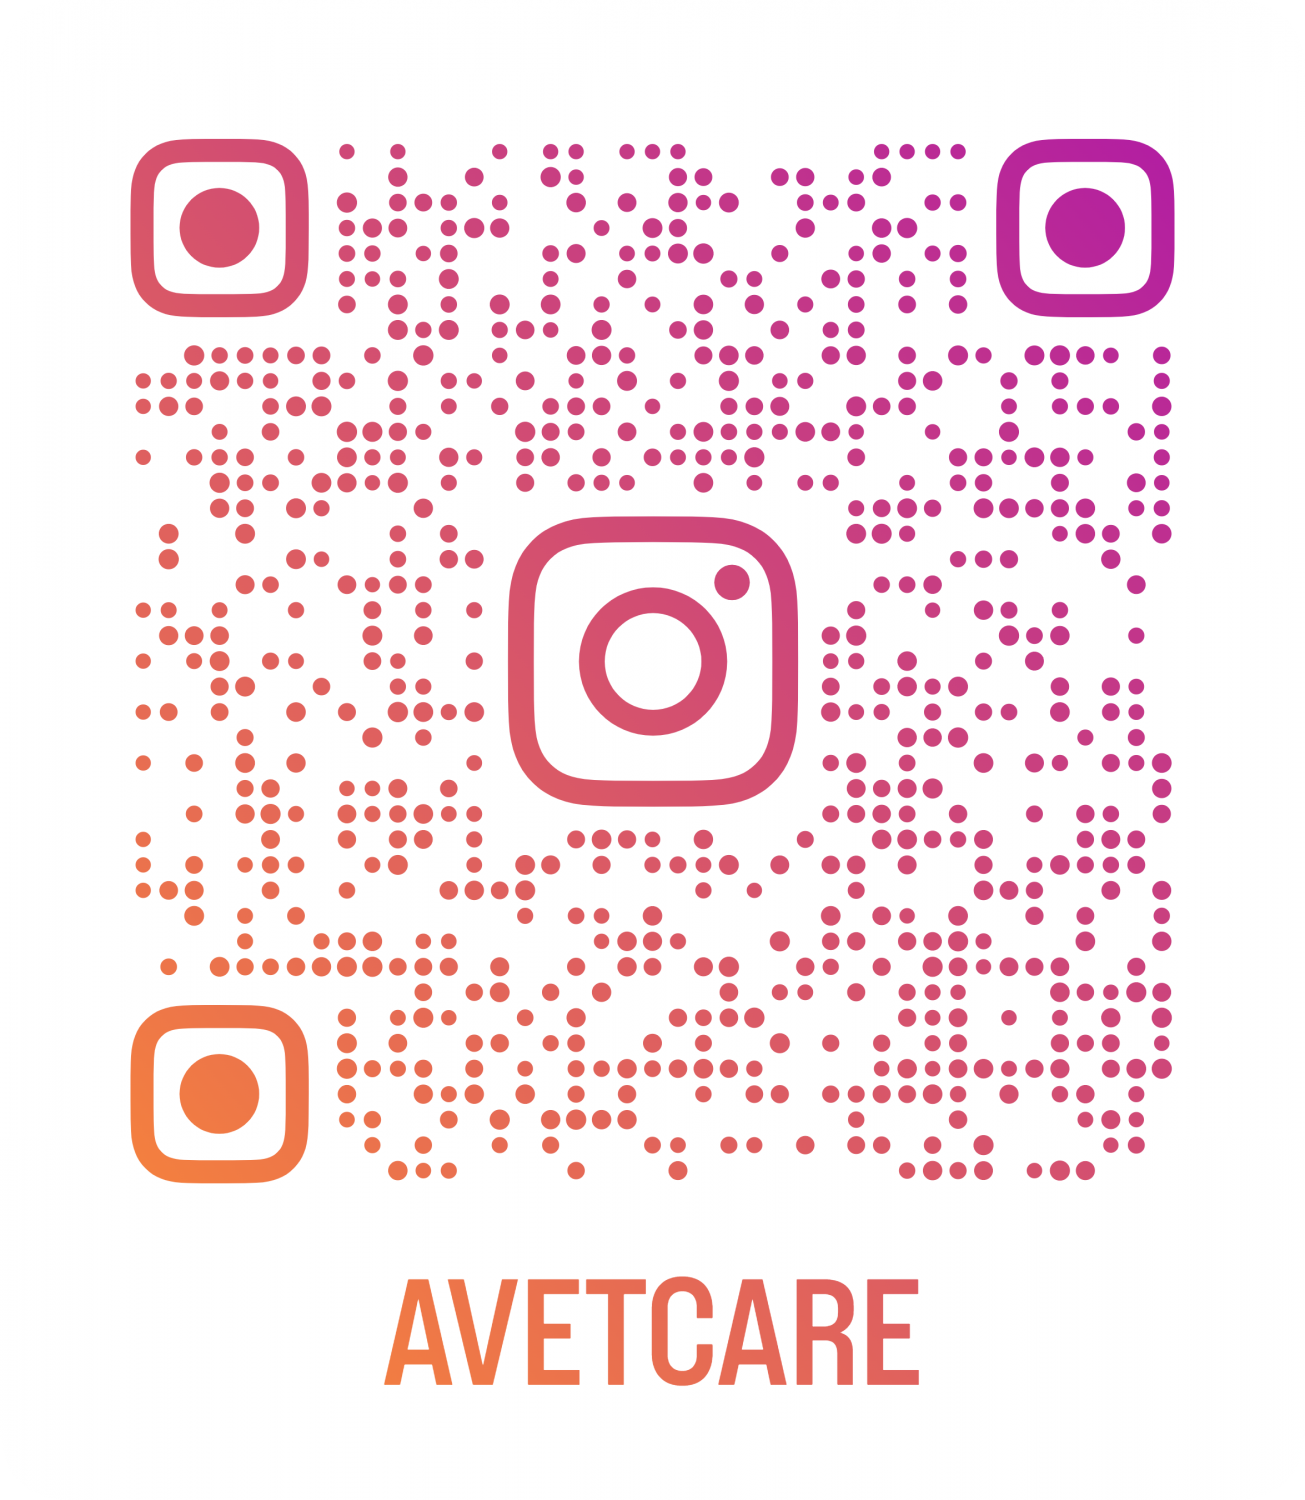 Advanced Veterinary Care Instagram QR